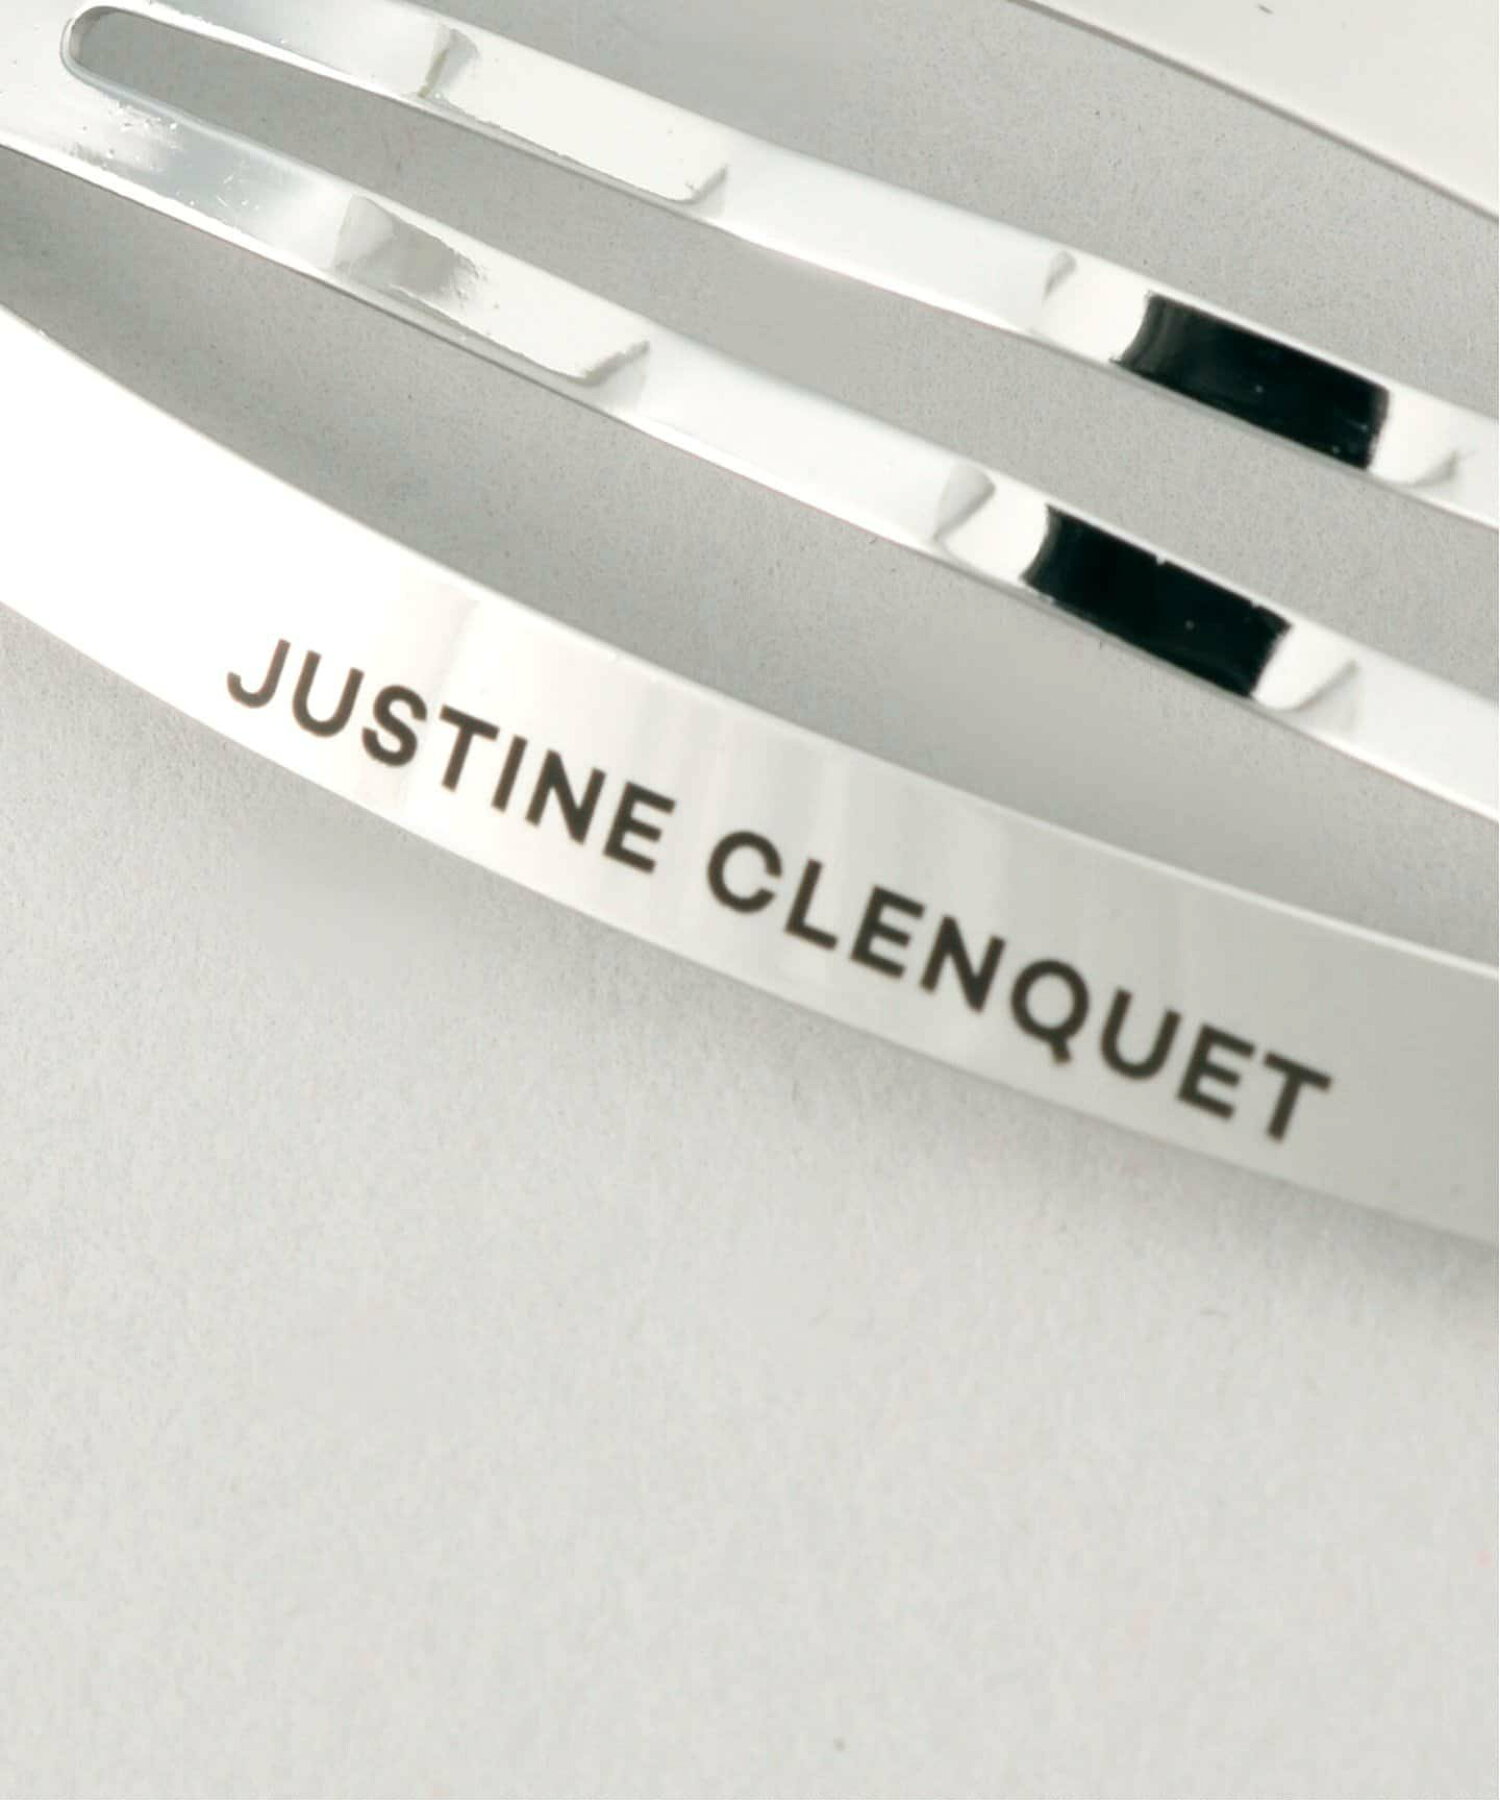 【JUSTINE CLENQUET/ジャスティーヌ クランケ】ANDREW ヘアークリップ